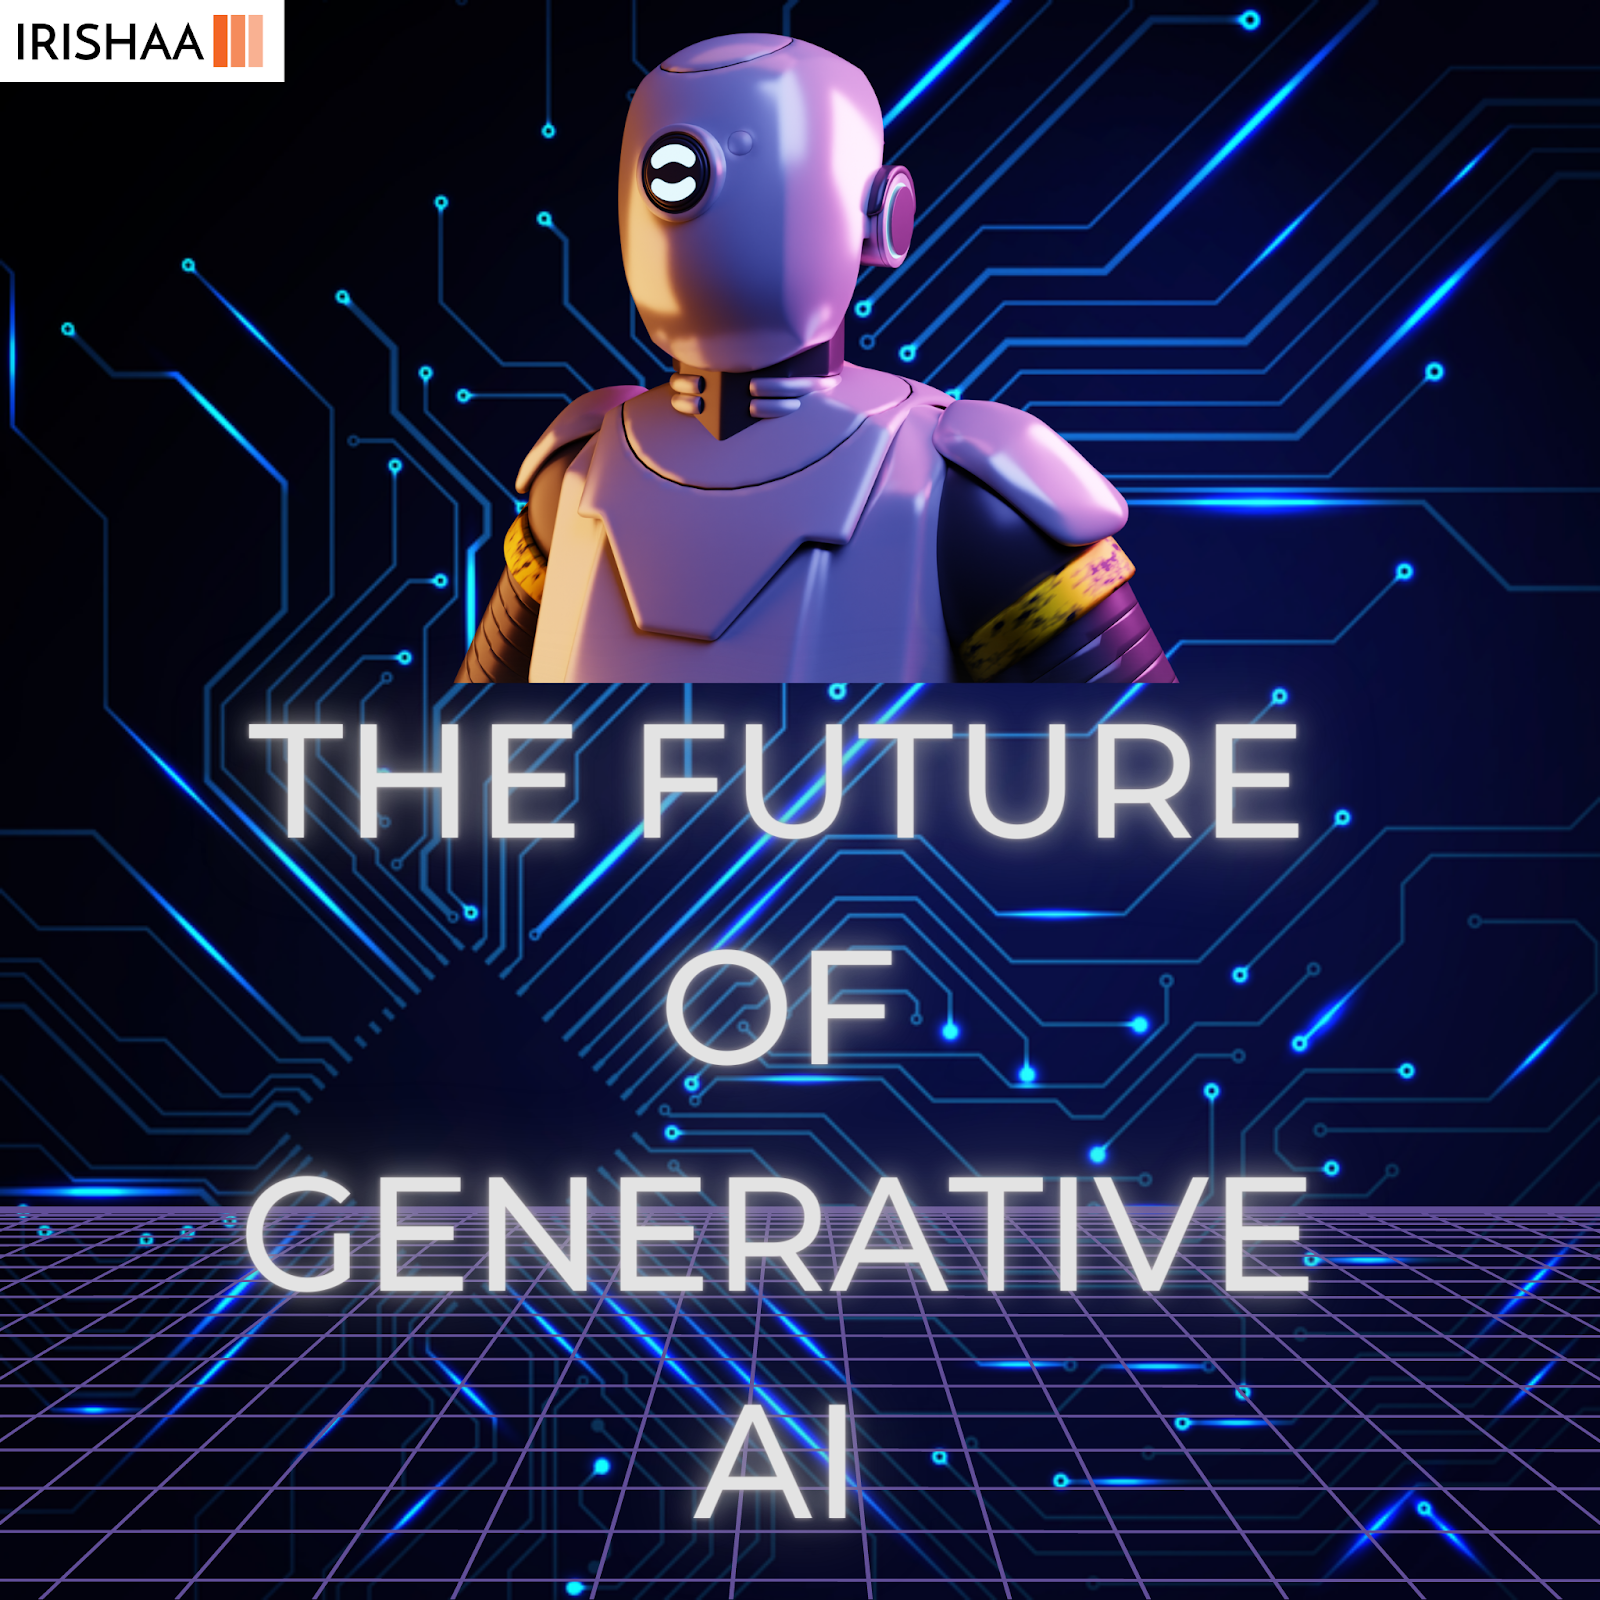 The Future of Generative AI
